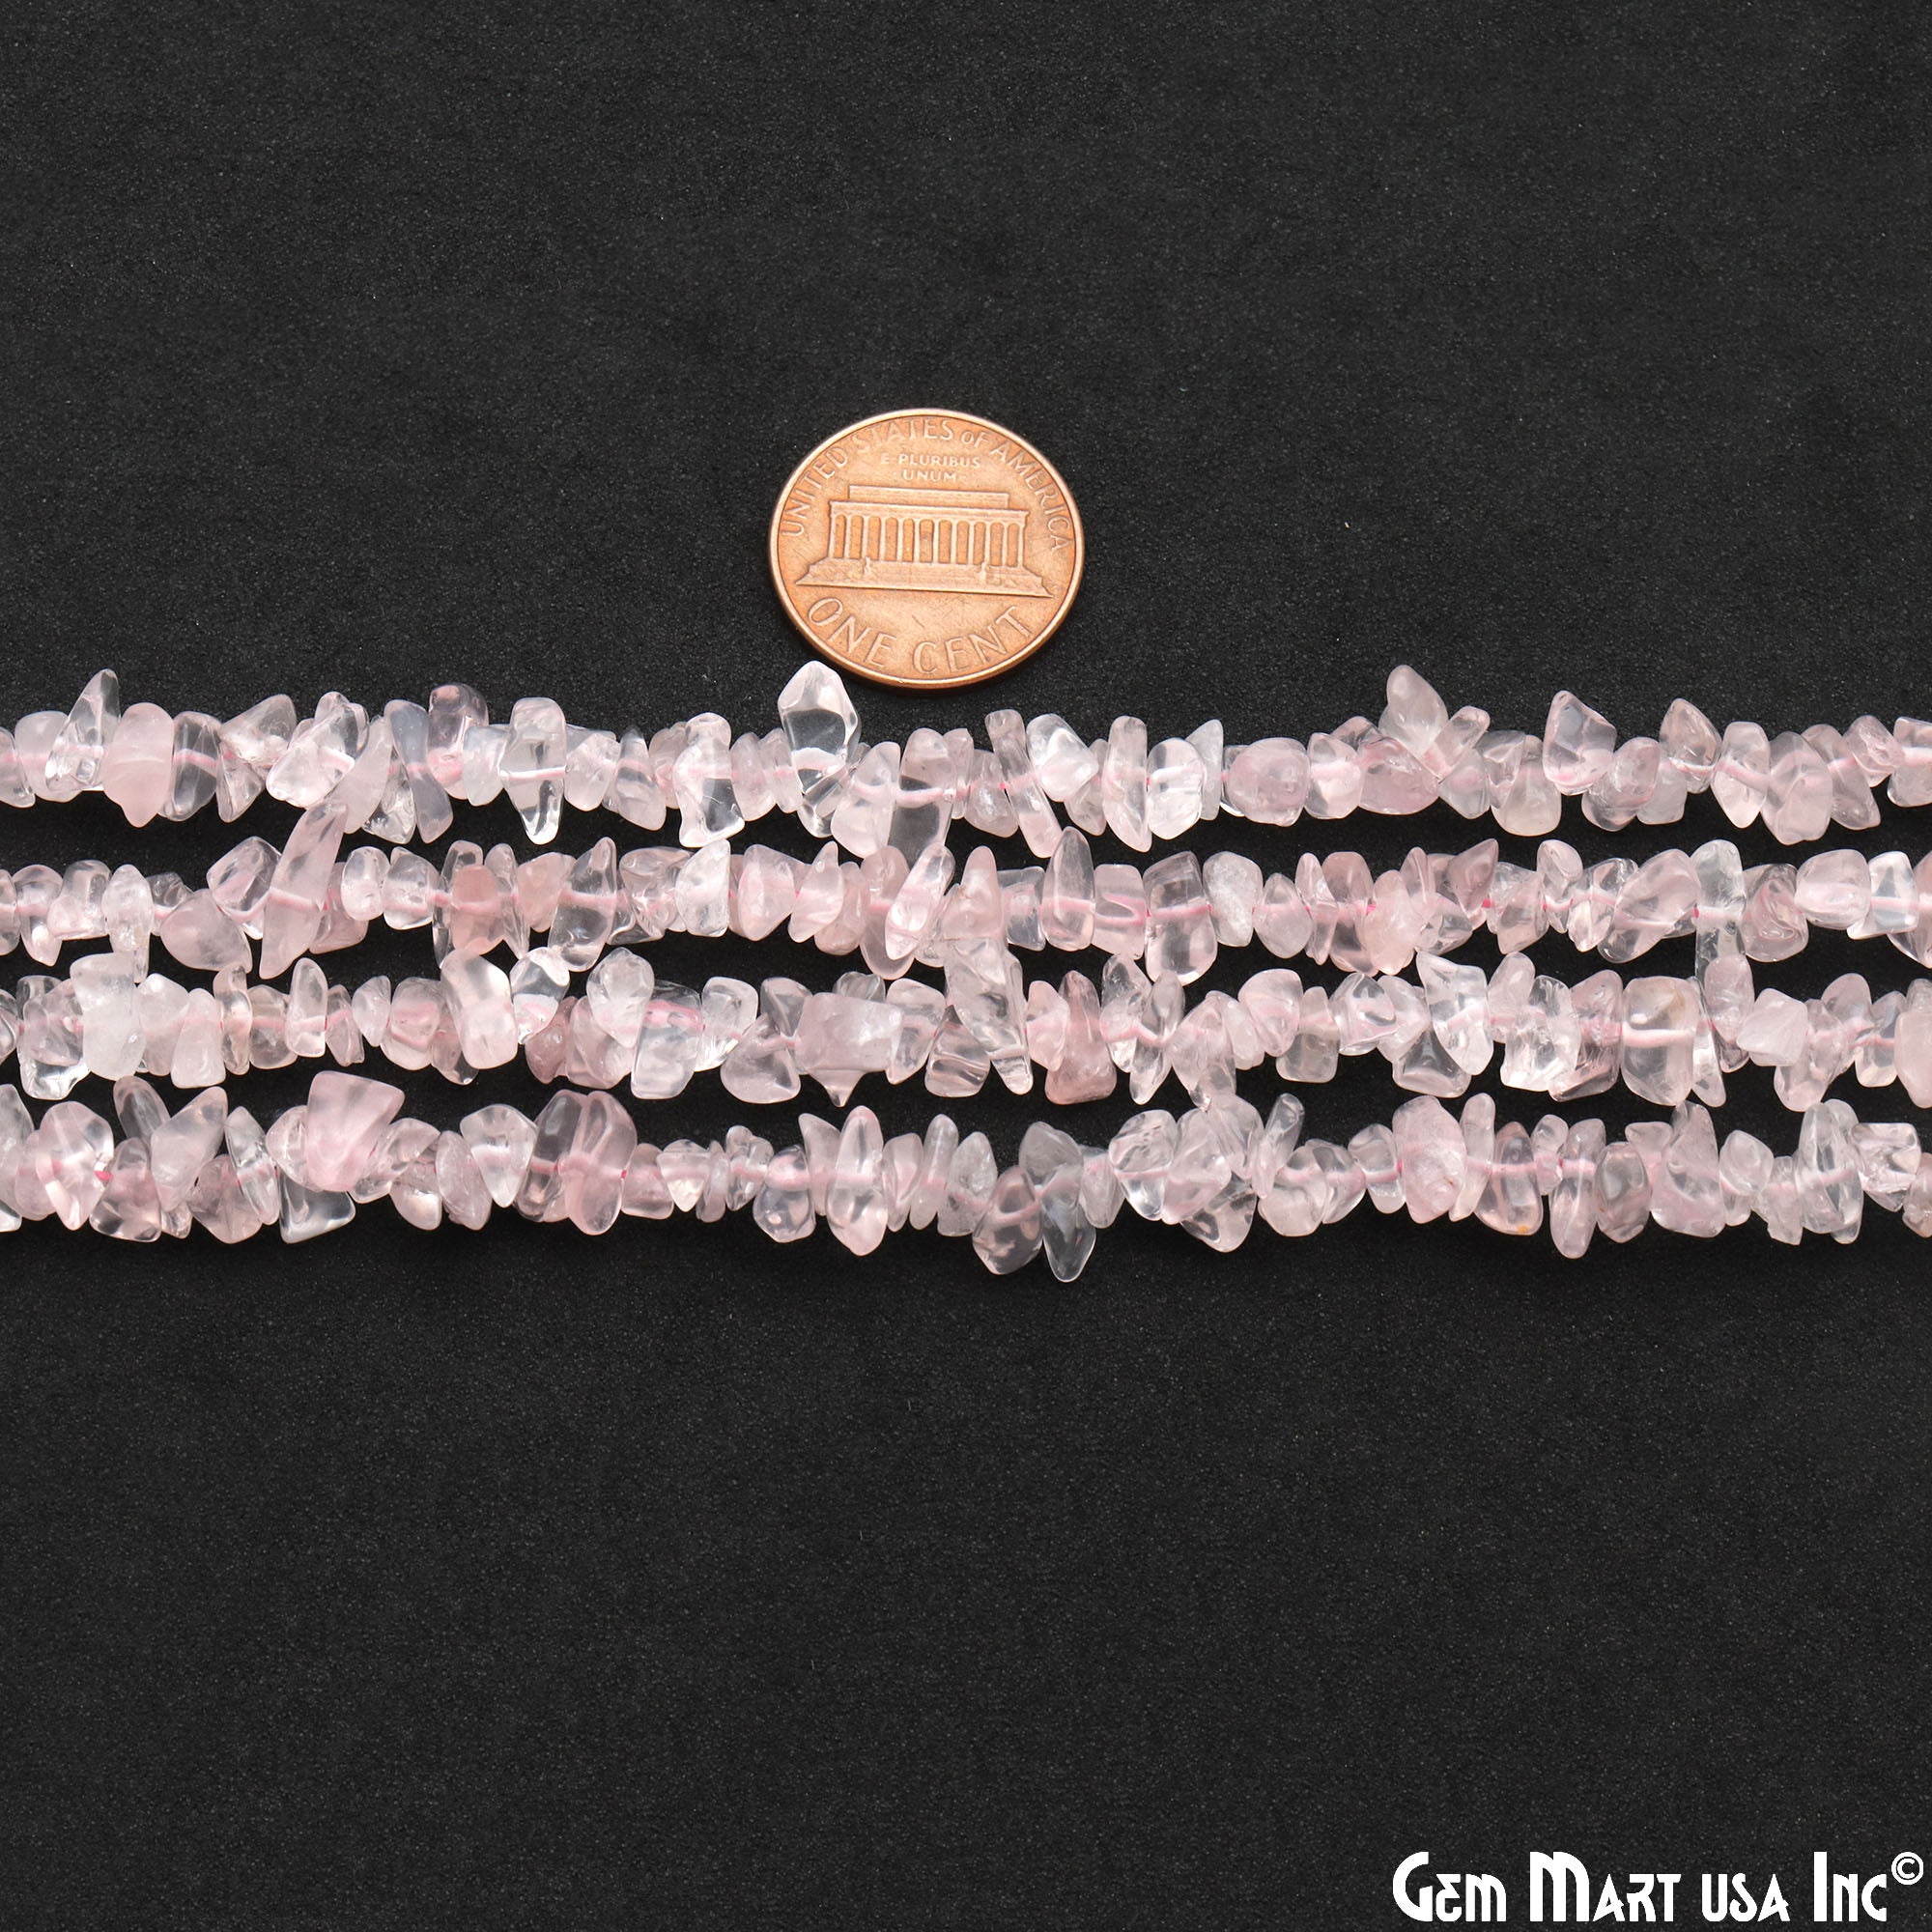 1 Strand of Semiprecious Gemstone Large Nugget Beads - Rose